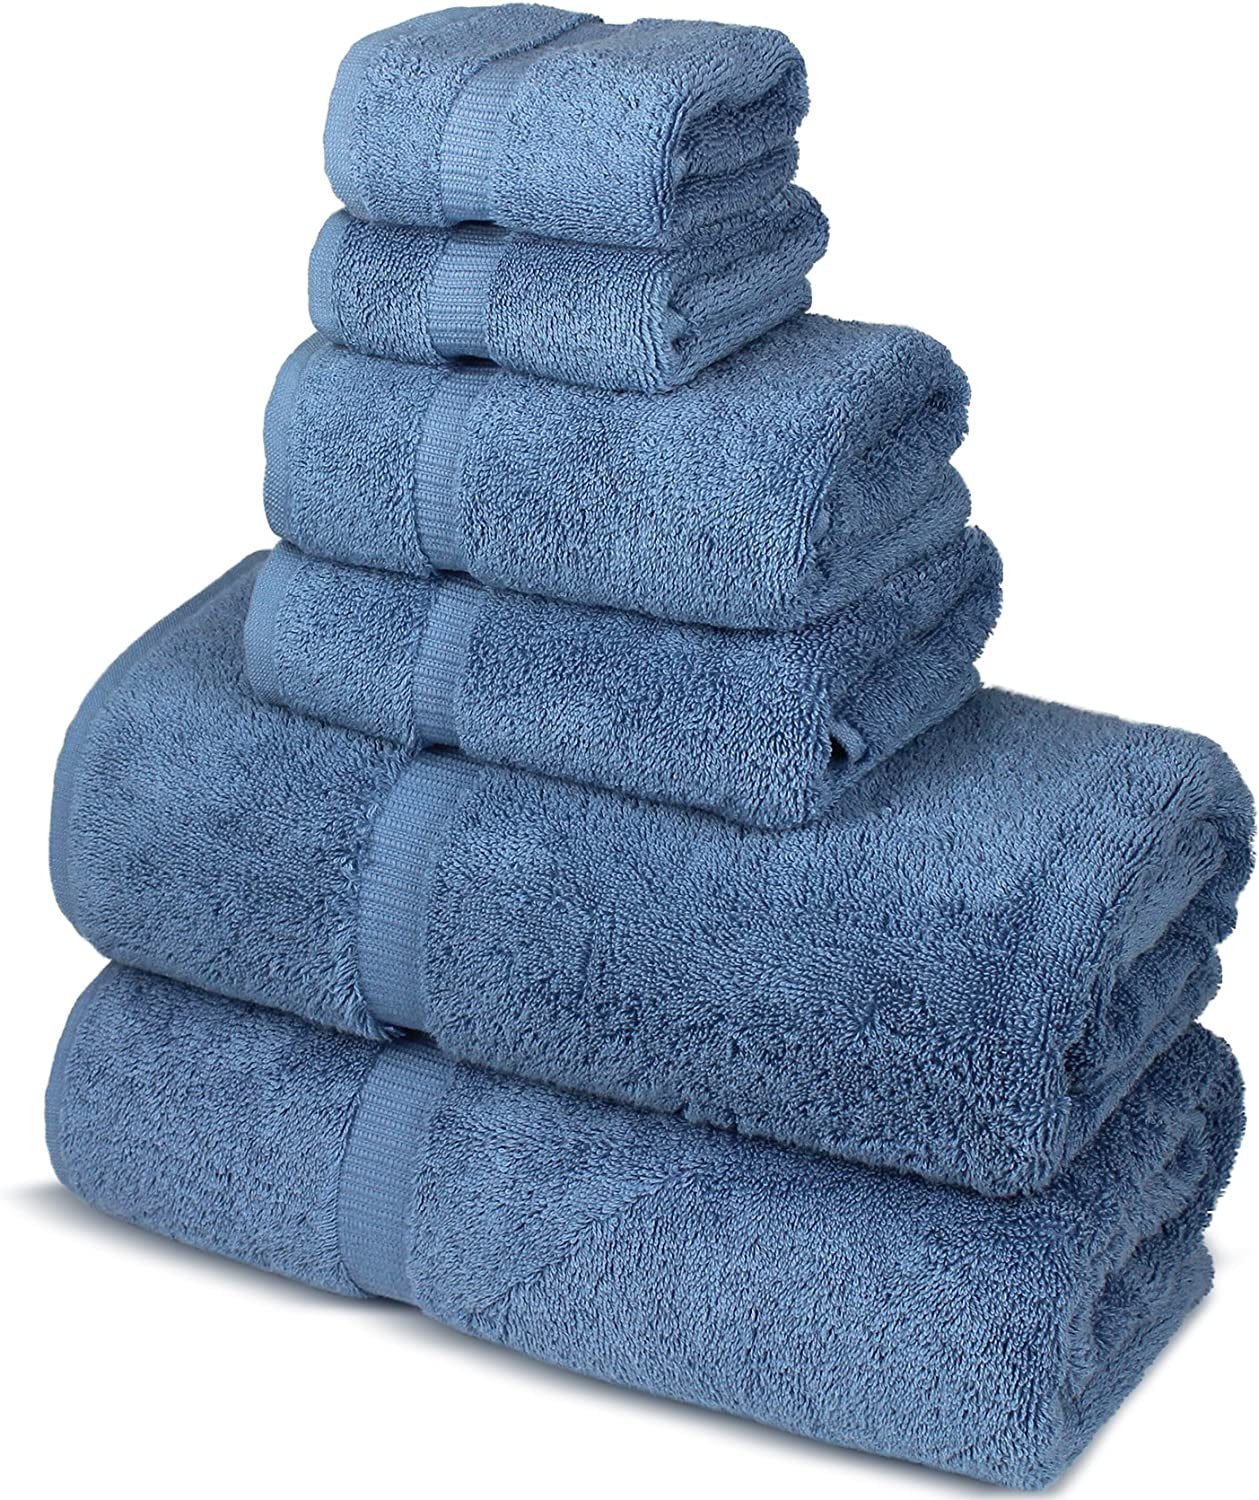 Luxury Spa and Hotel Quality Premium Turkish Cotton 6-Piece Towel Set (2 X Bath Towels, 2 X Hand Towels, 2 X Washcloths)